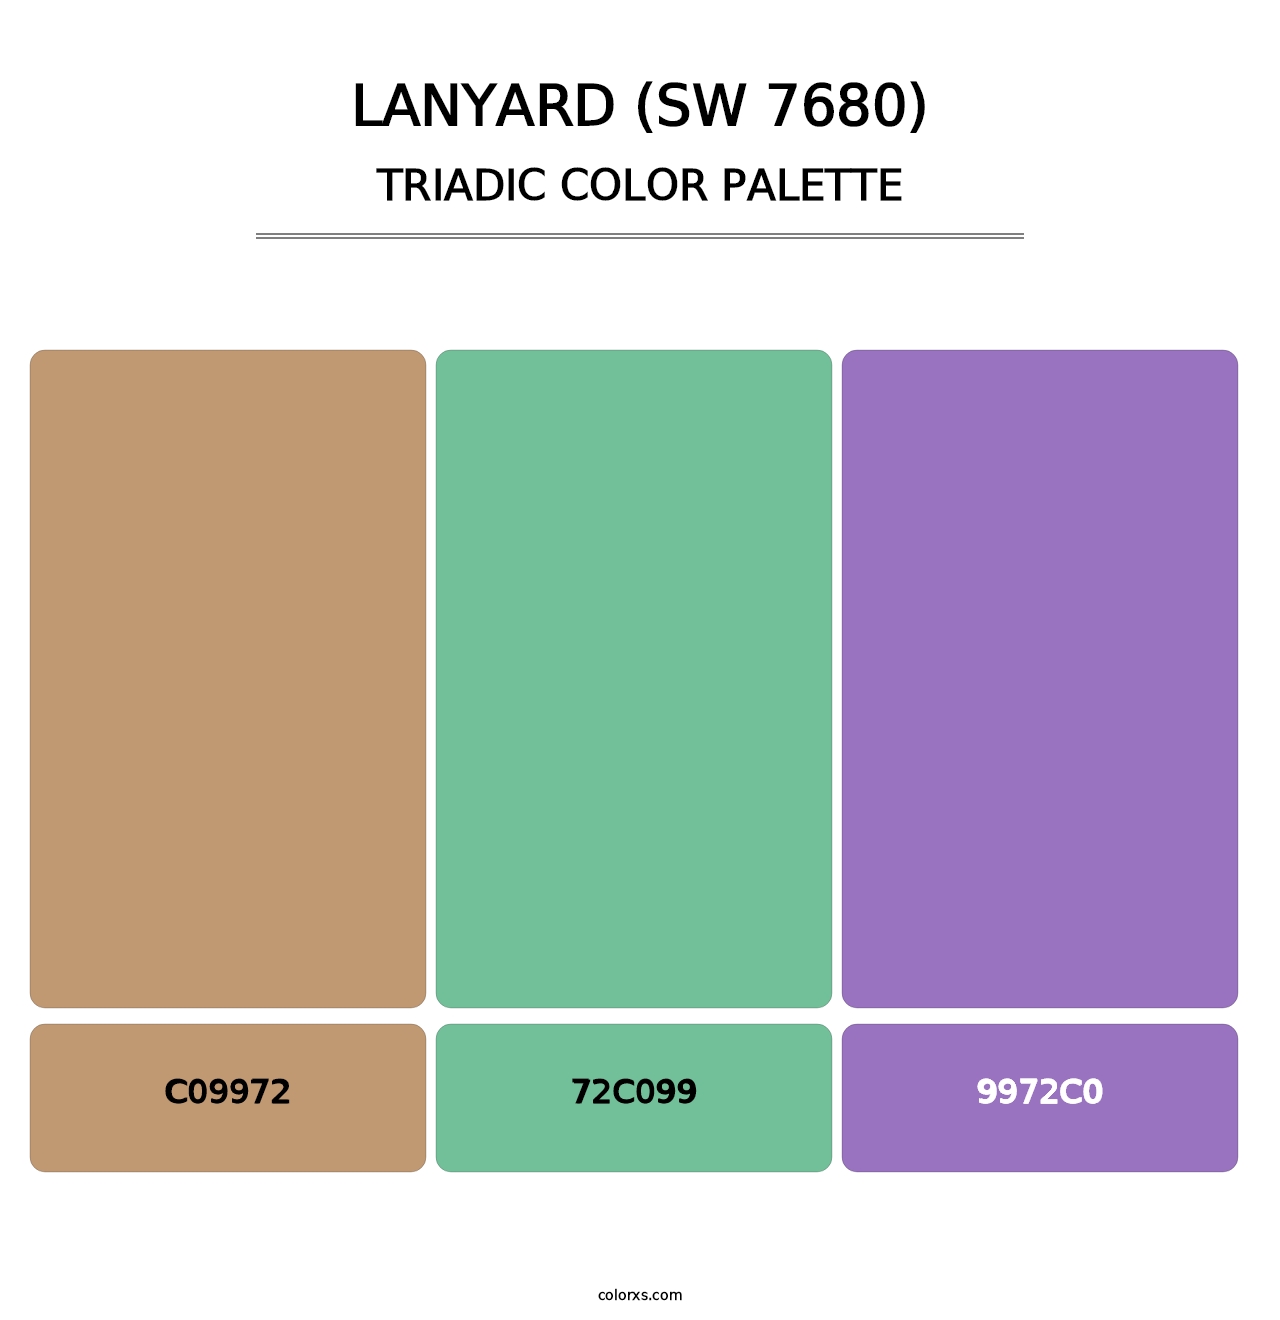 Lanyard (SW 7680) - Triadic Color Palette